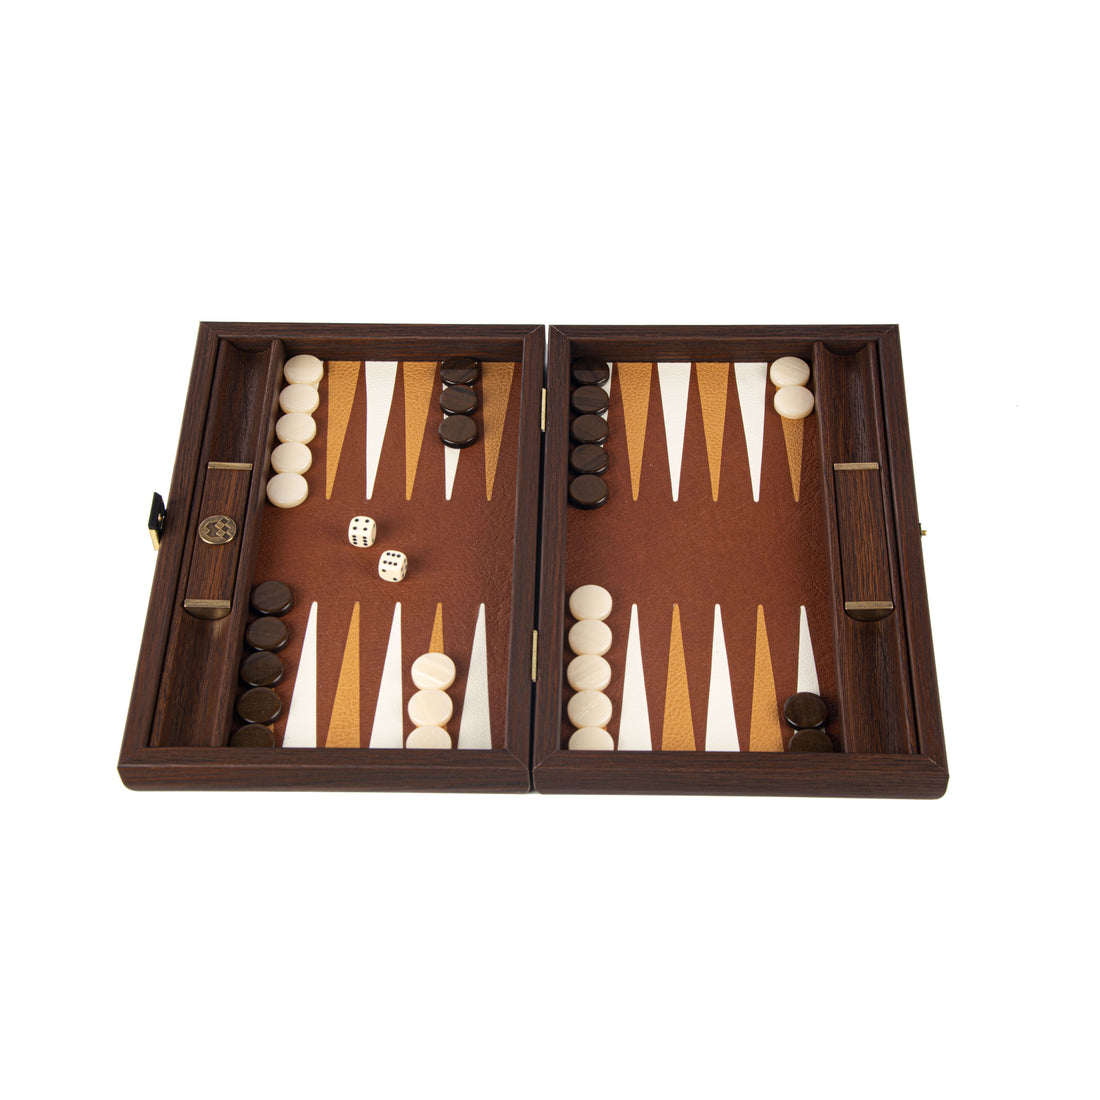 BRAIDED STRAW IN DARK BROWN COLOUR Backgammon (Travel size) - Premium Backgammon from MANOPOULOS Chess & Backgammon - Just €127! Shop now at MANOPOULOS Chess & Backgammon